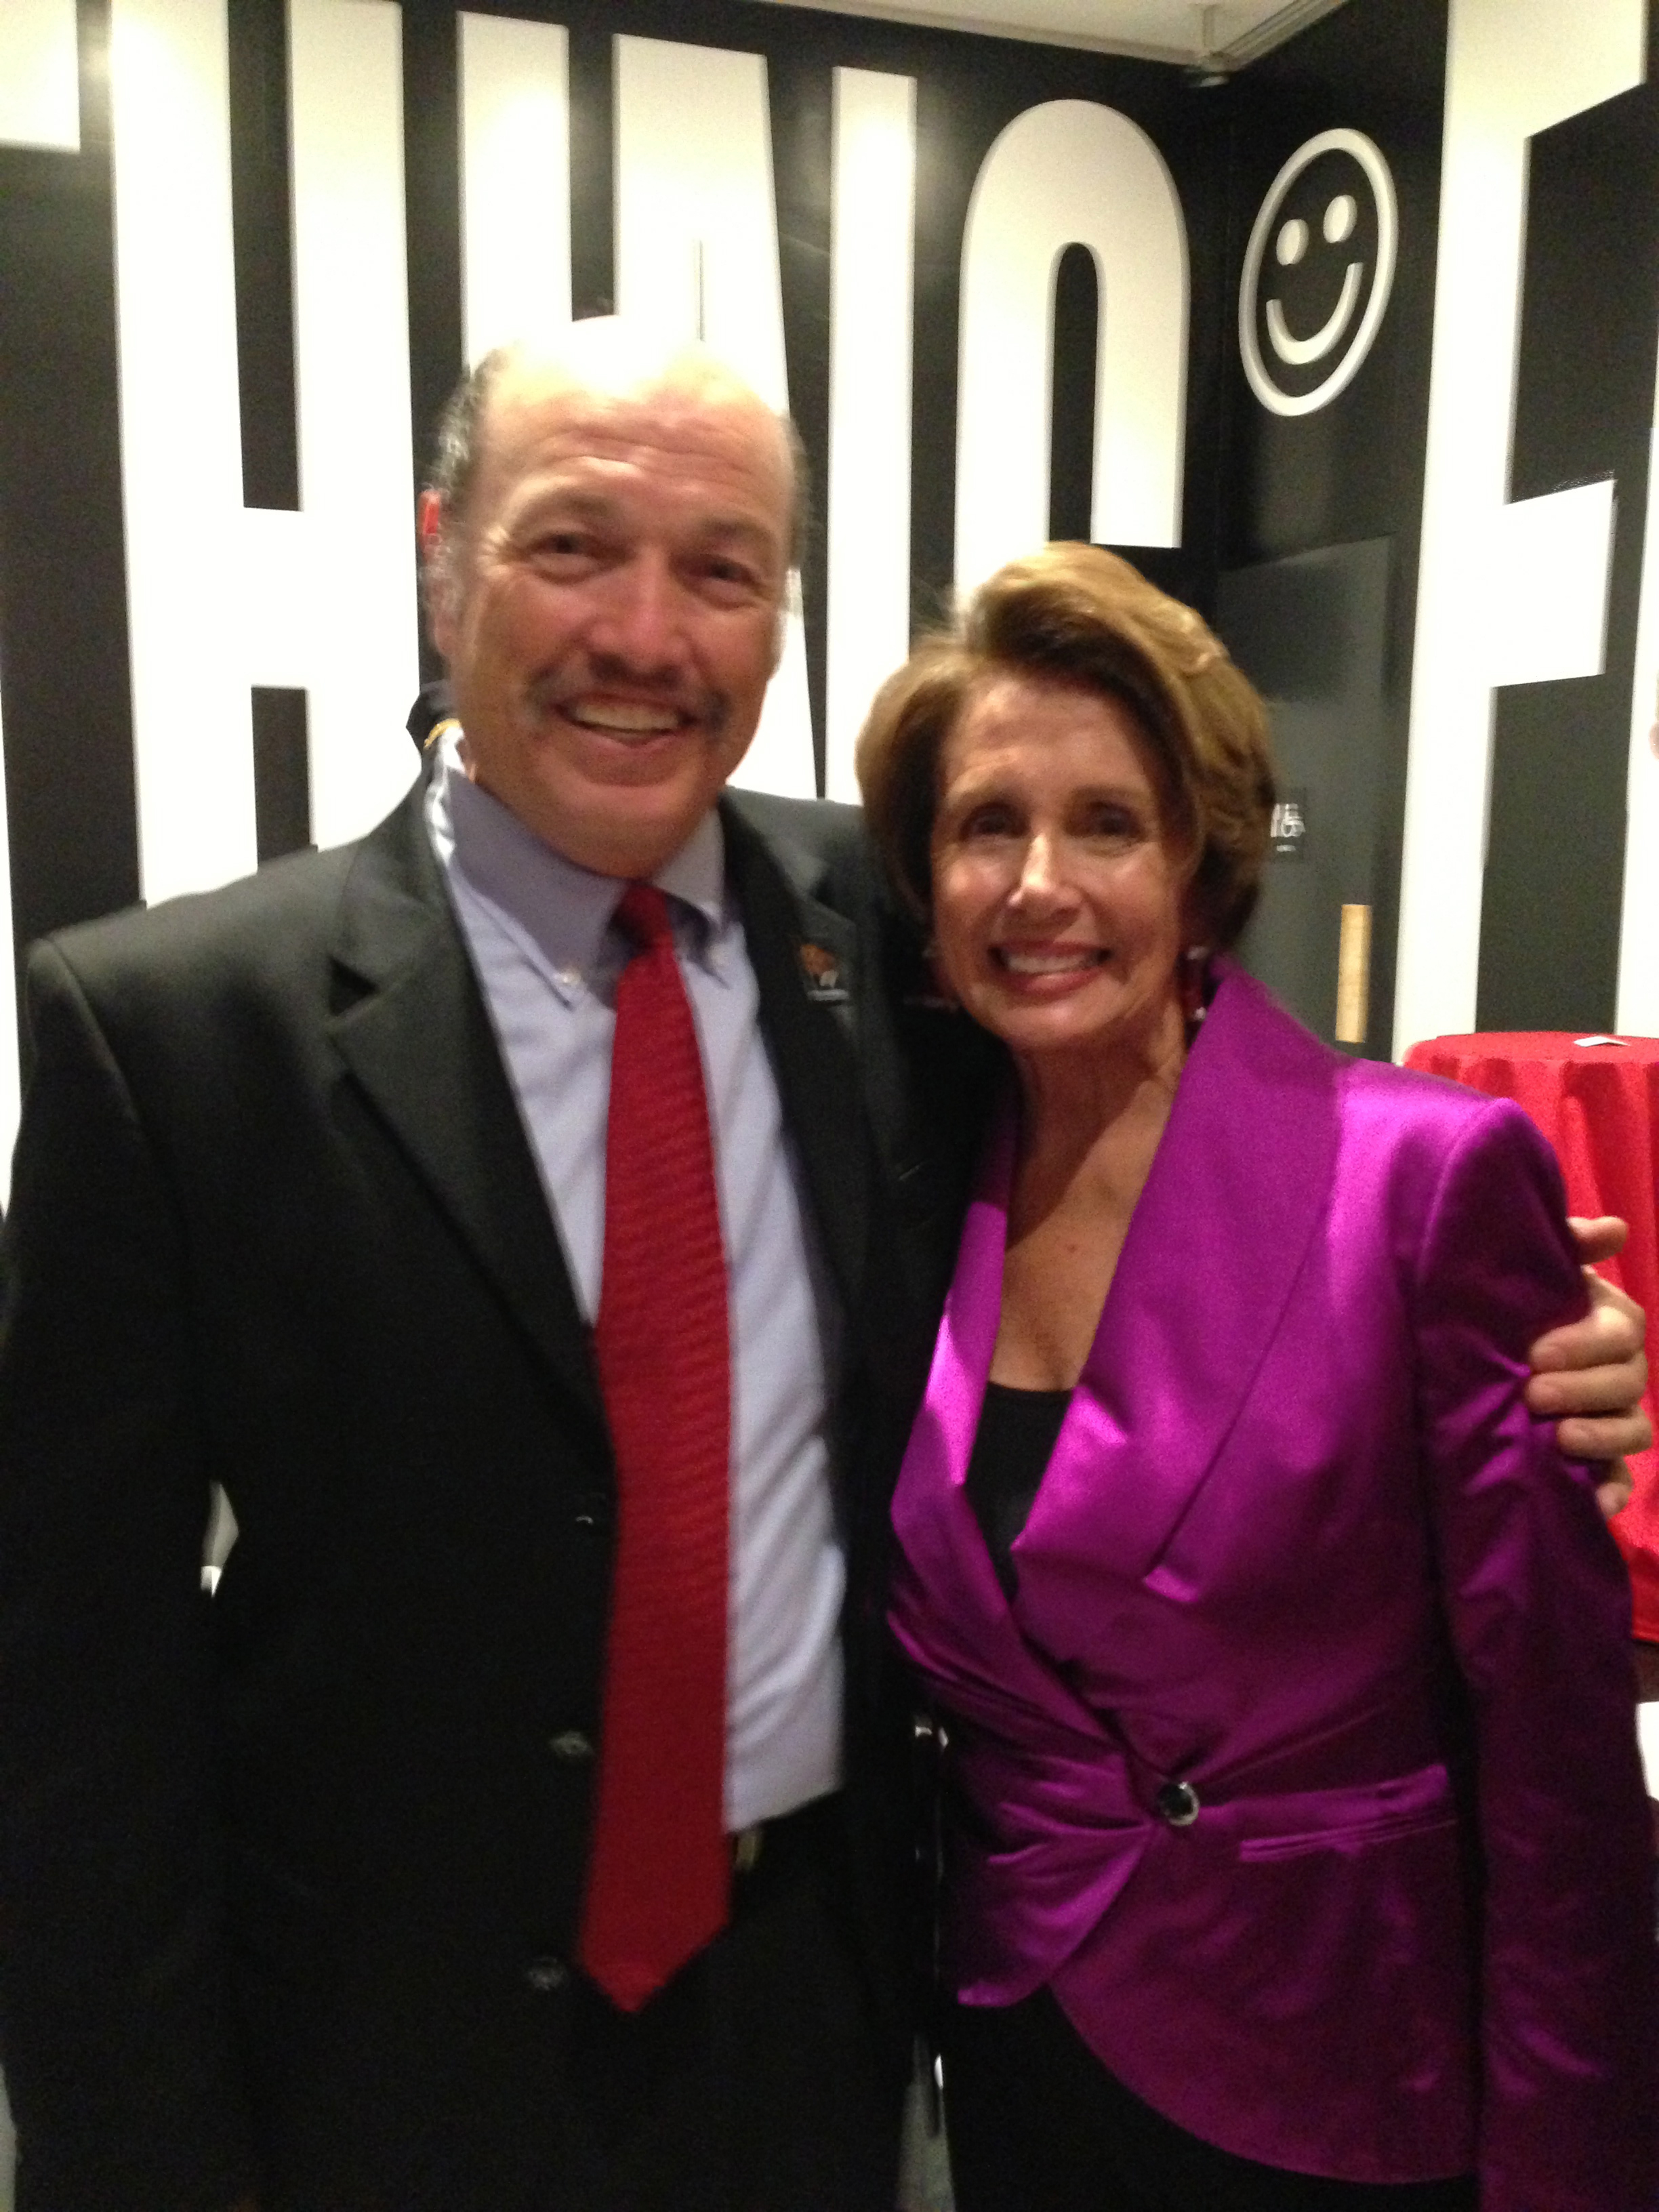 Tony with former Speaker of the House Nancy Pelosi